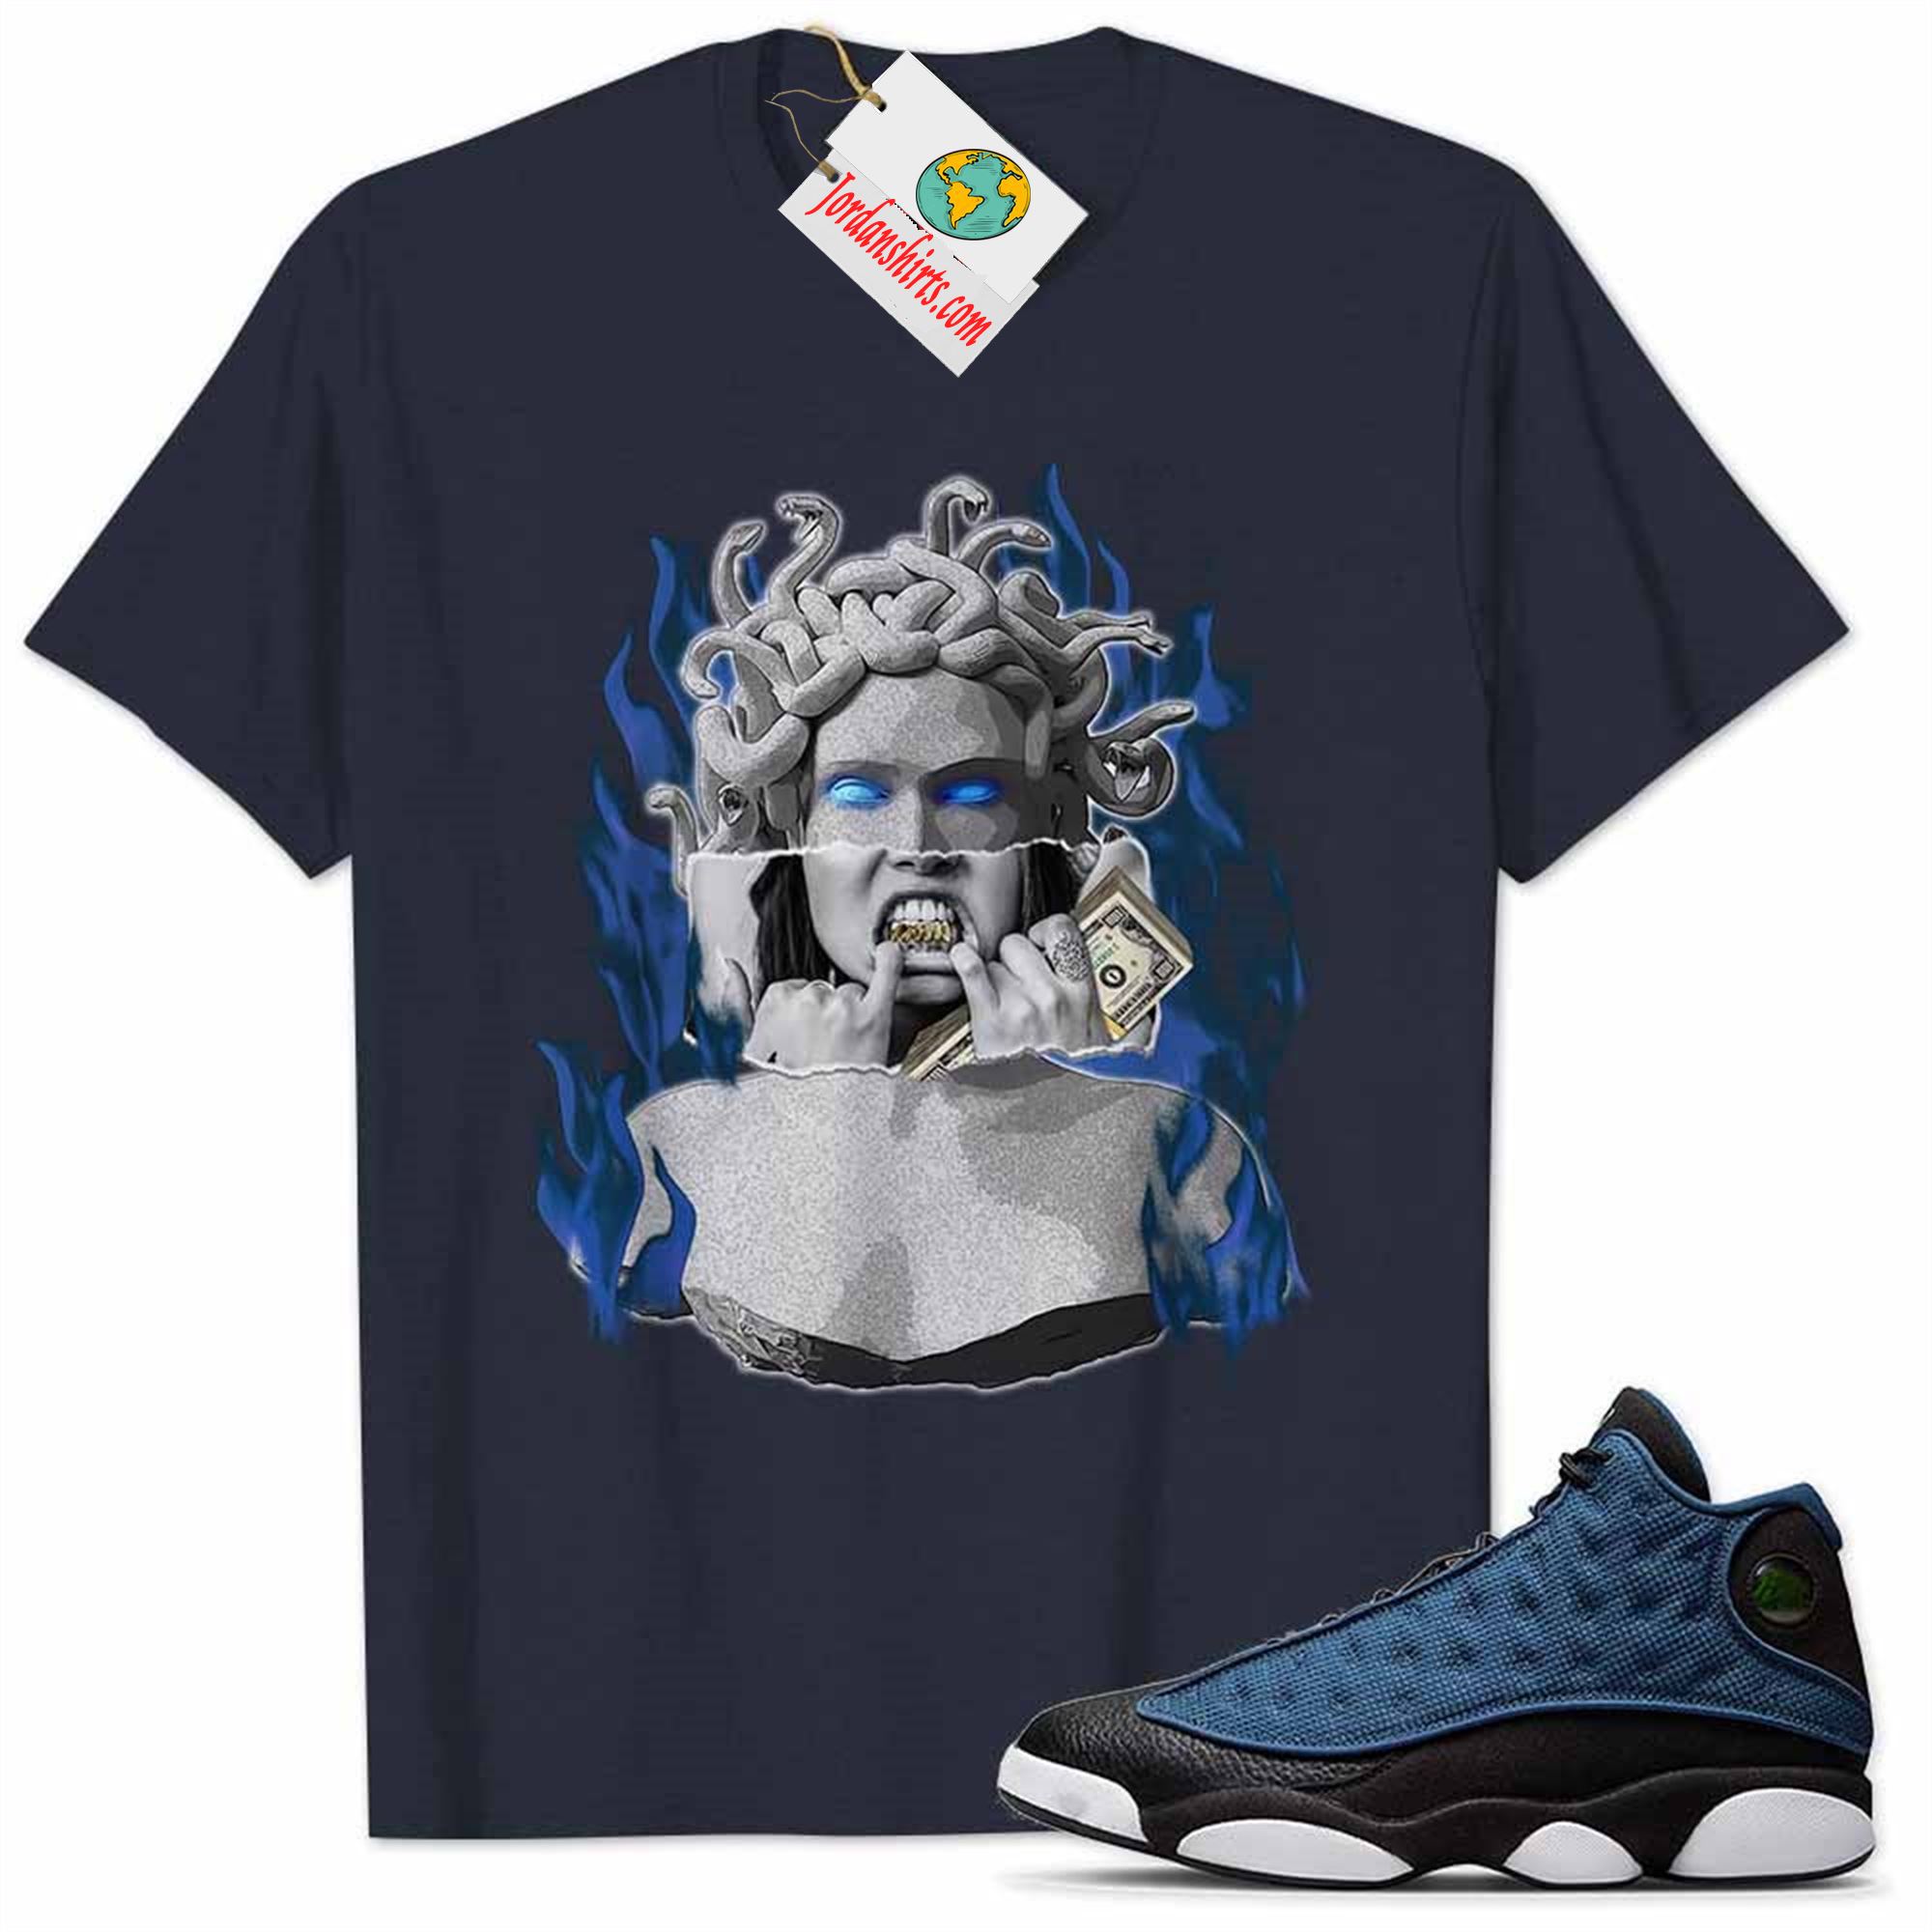 Jordan 13 Shirt, Jordan 13 Brave Blue Shirt Medusa Grillz Money Fire Navy Plus Size Up To 5xl